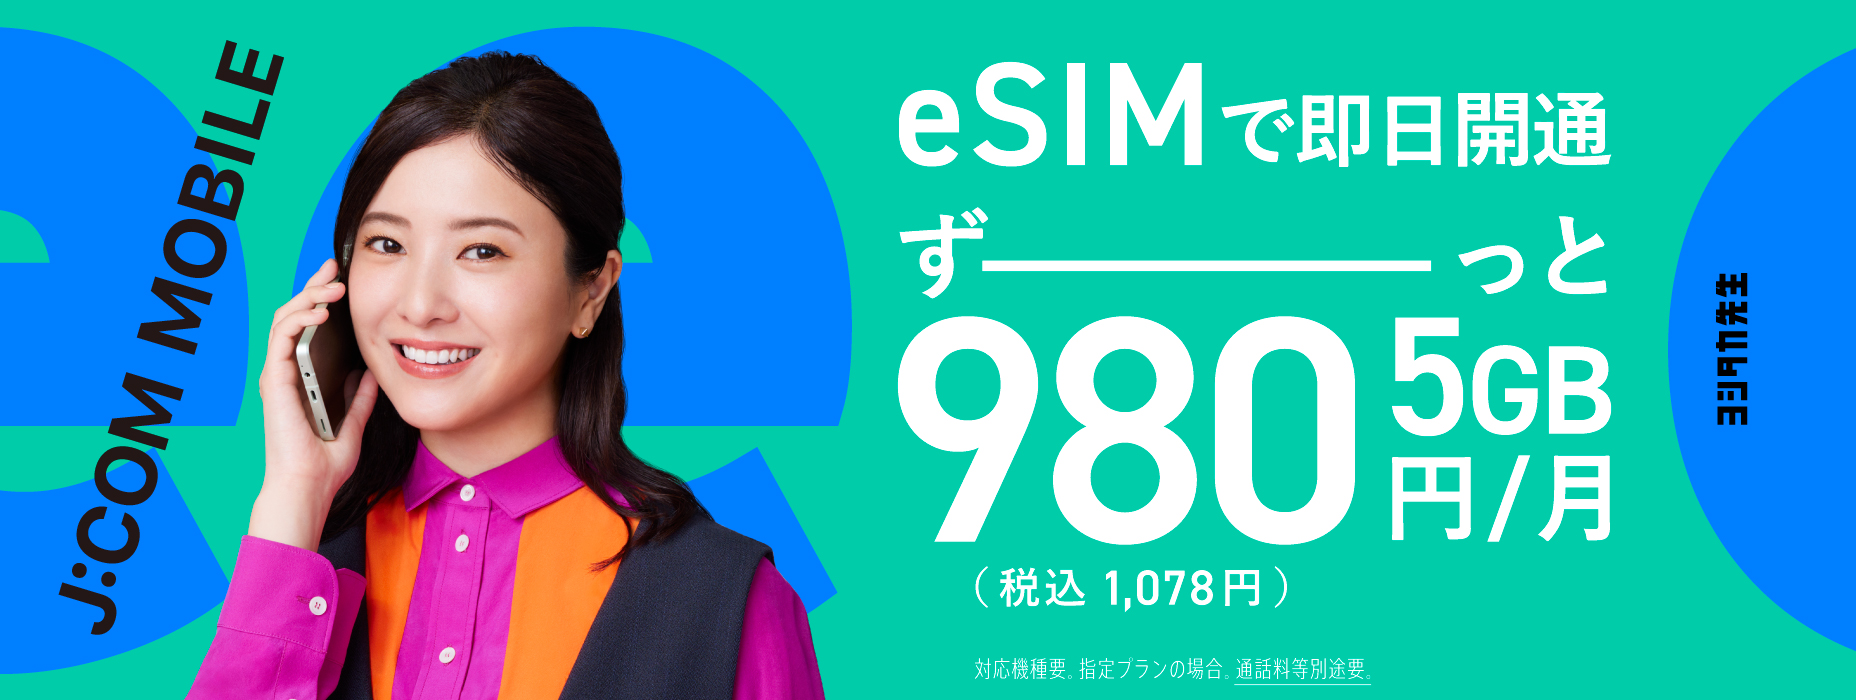 eSIM新登场!数据盛放应用5 GB长980日元 (含税1,078日元)